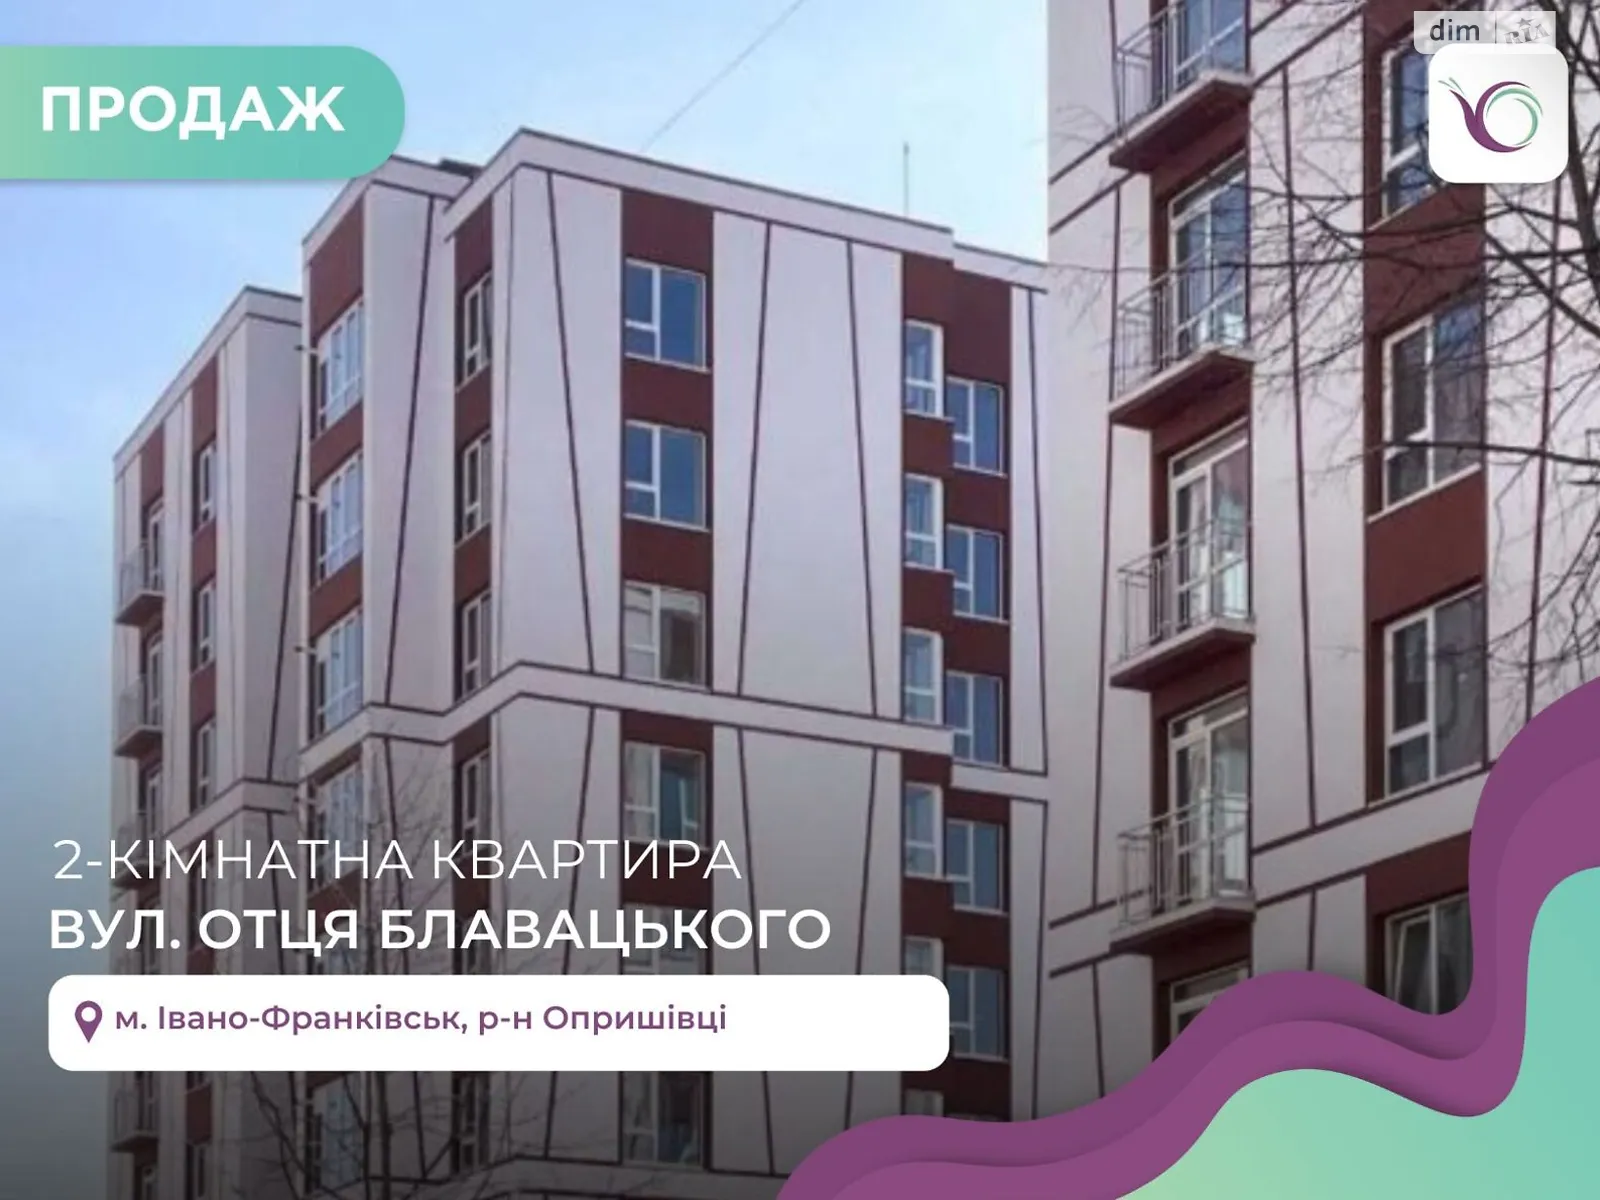 Продается 2-комнатная квартира 54.4 кв. м в Ивано-Франковске, ул. Отца Блавацкого - фото 1